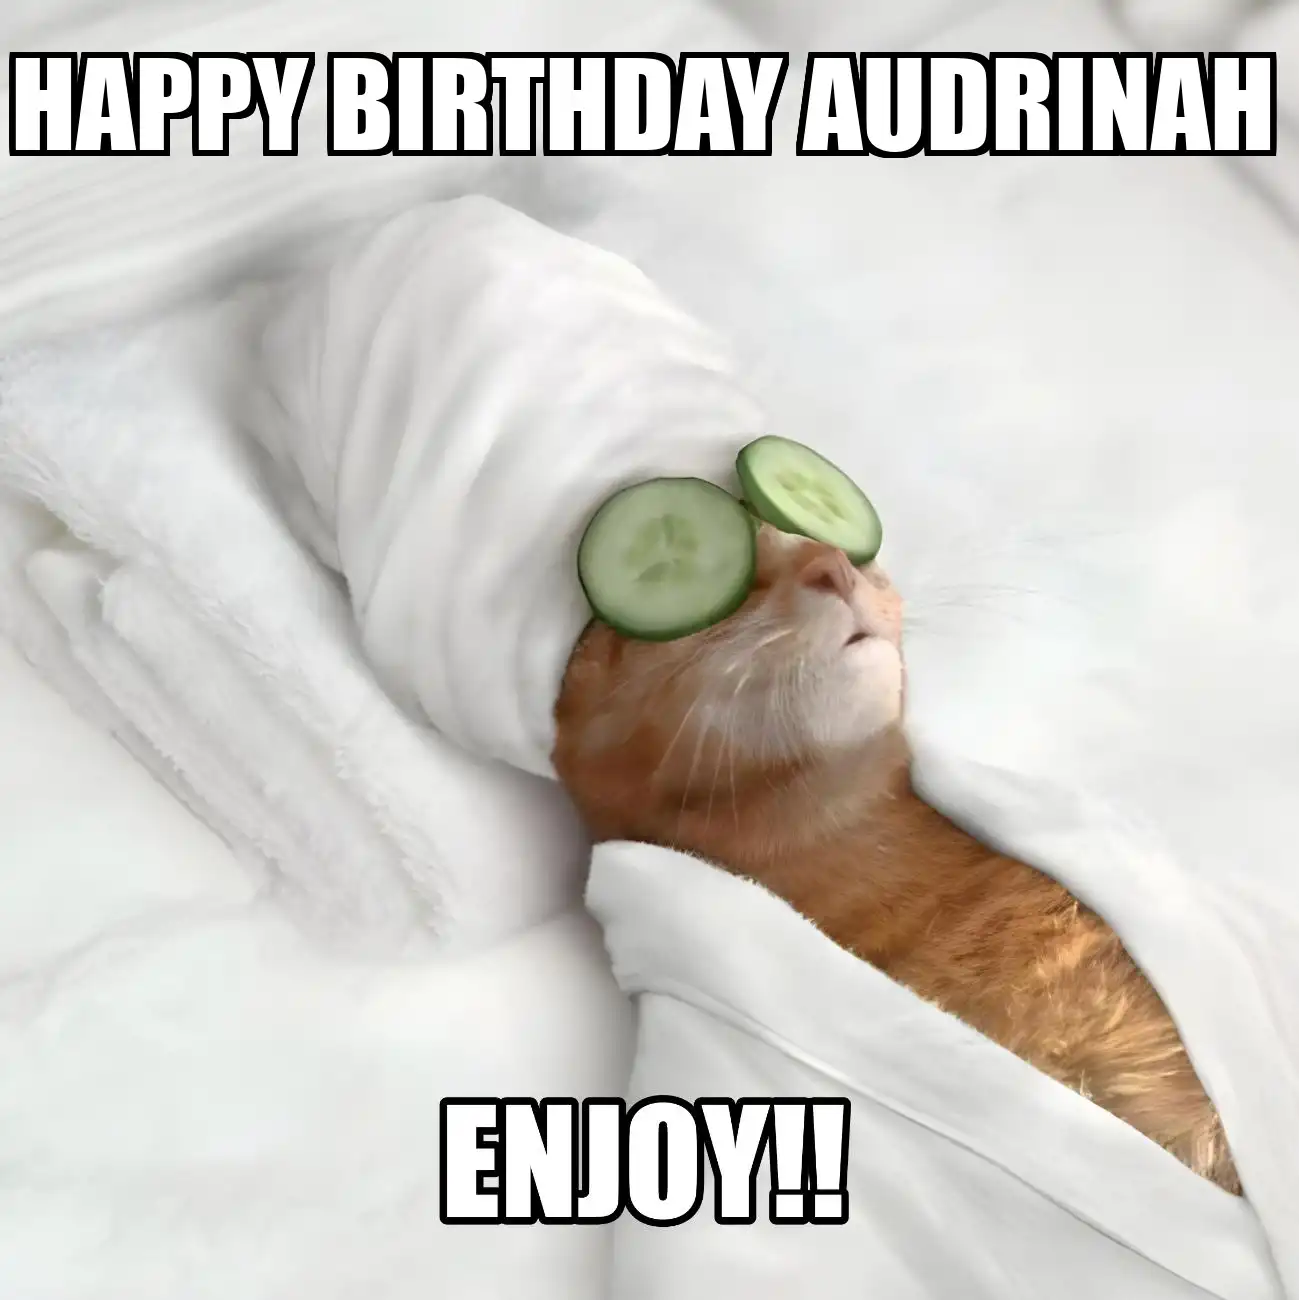 Happy Birthday Audrinah Enjoy Cat Meme